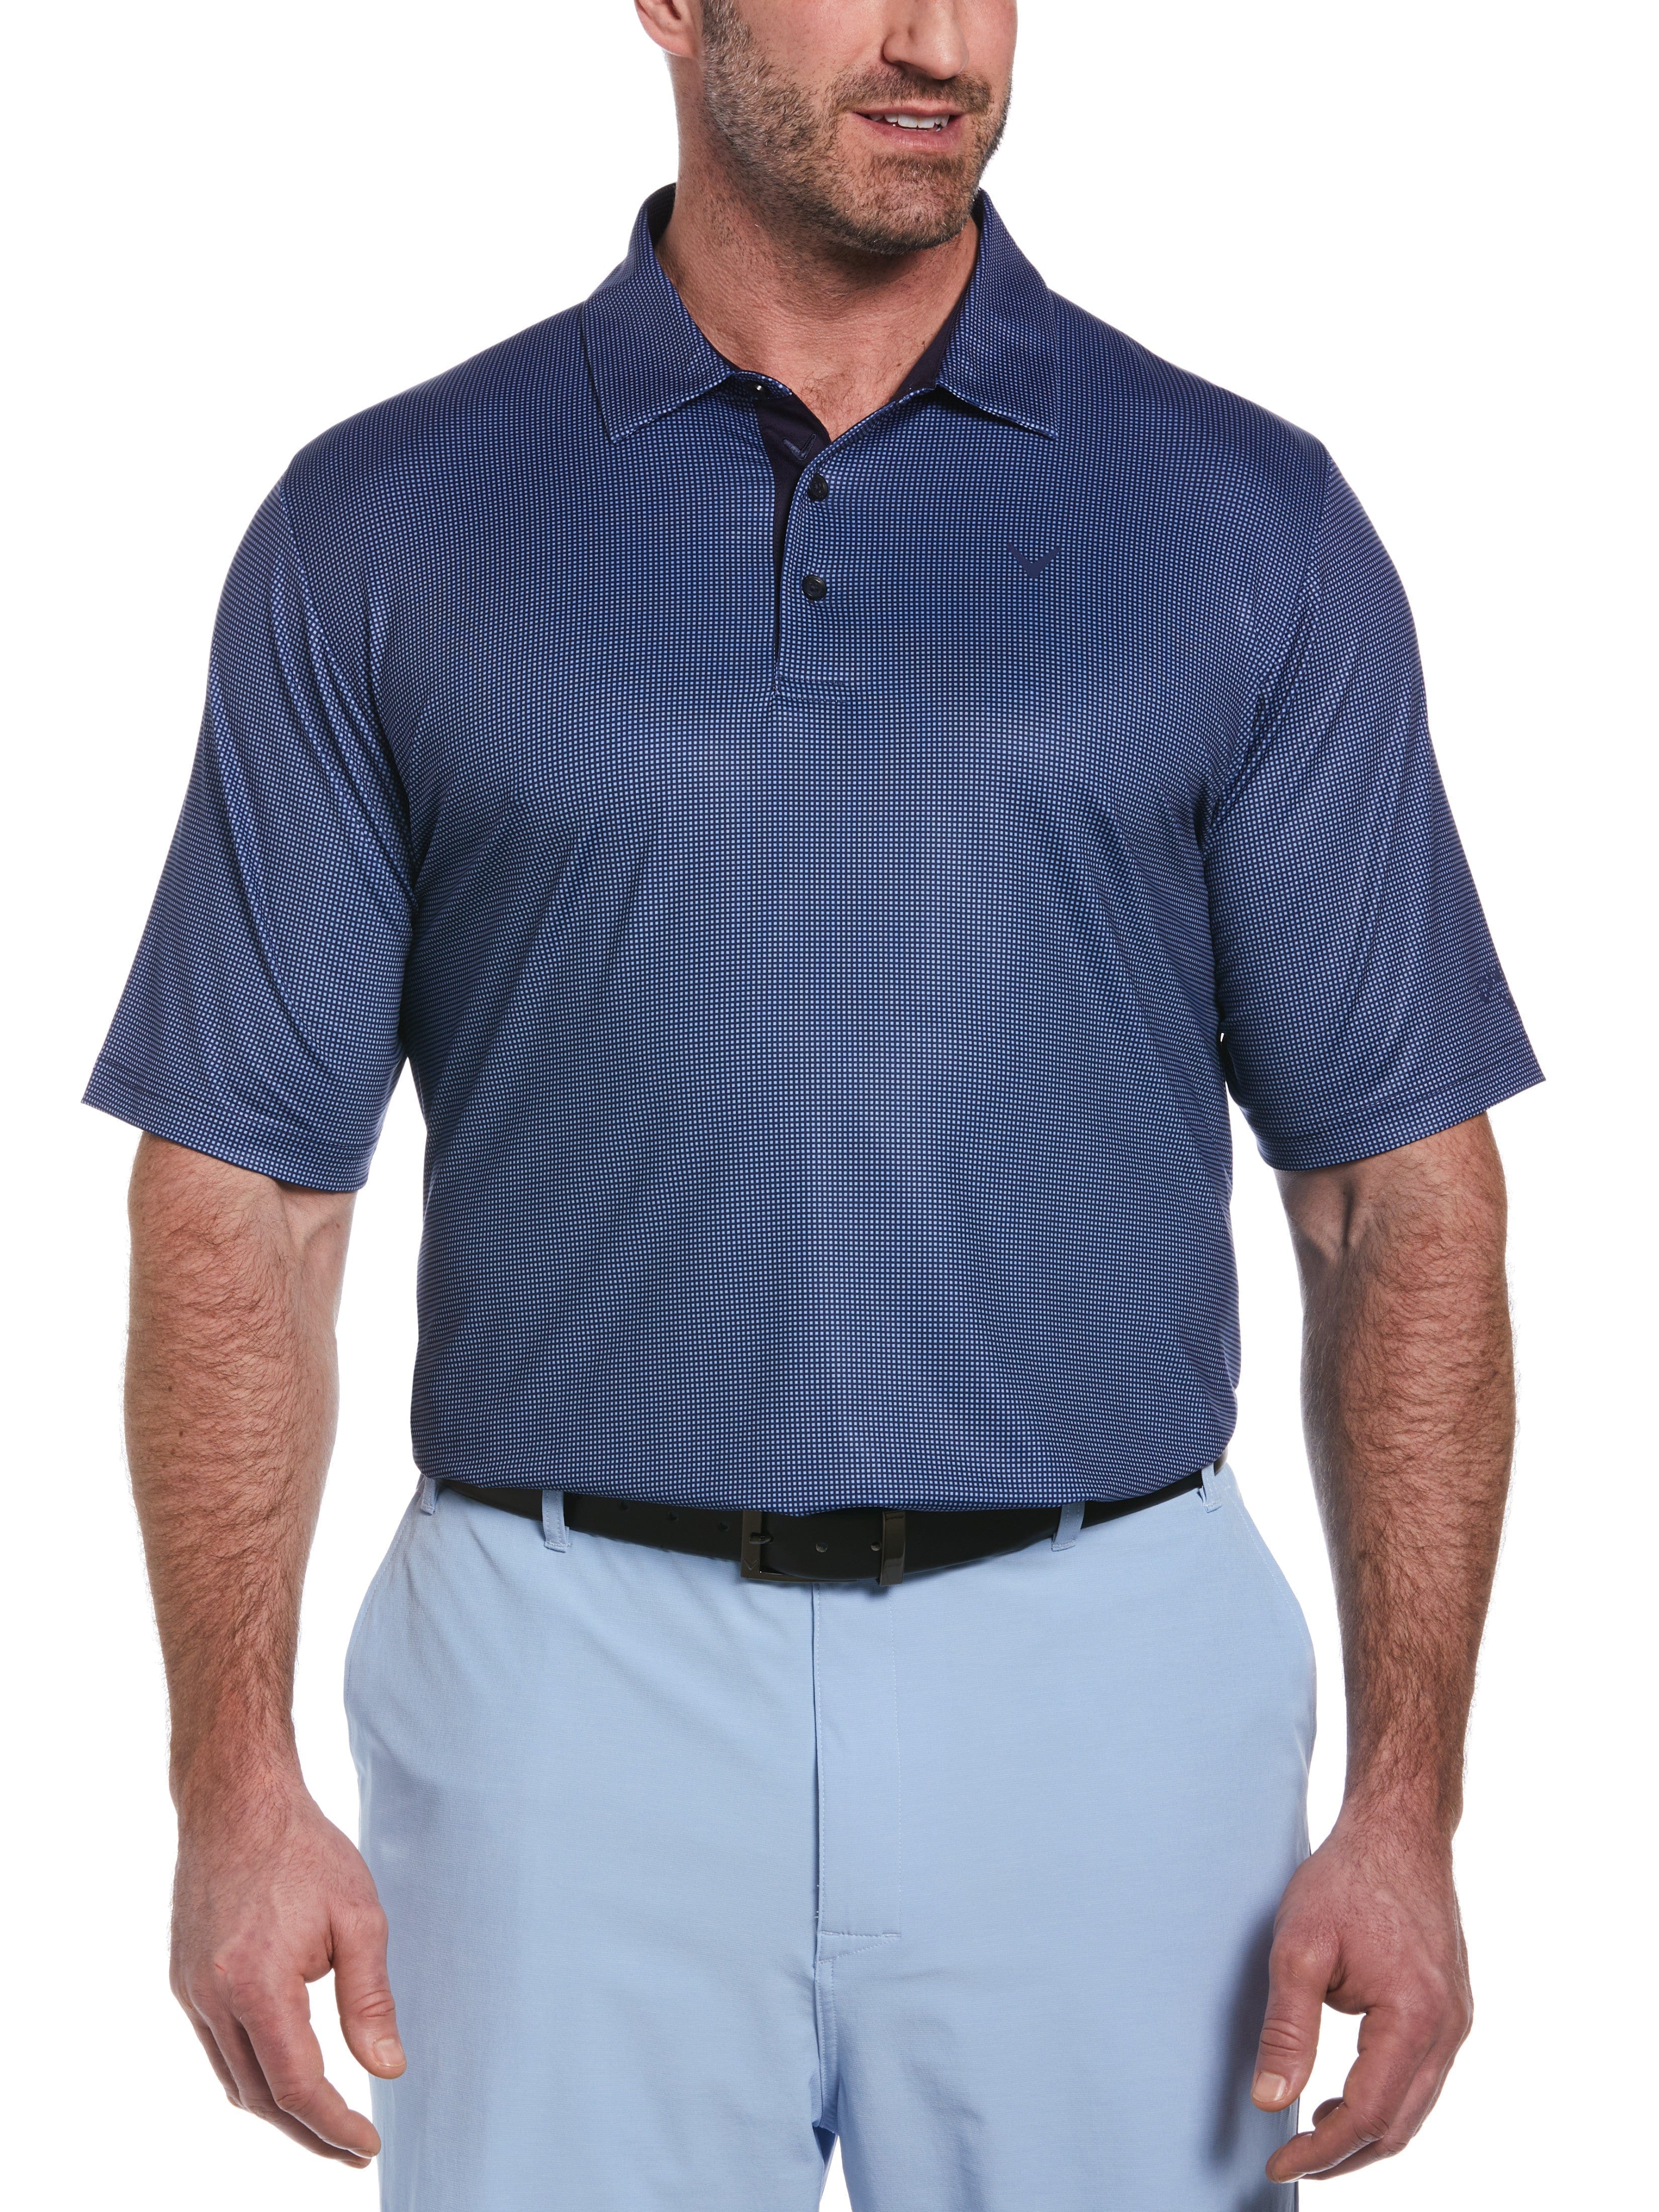 Callaway Apparel Mens Big & Tall Printed Gingham Swing Tech Polo Shirt, Size 4XLT, Navy Blue, Polyester/Elastane | Golf Apparel Shop